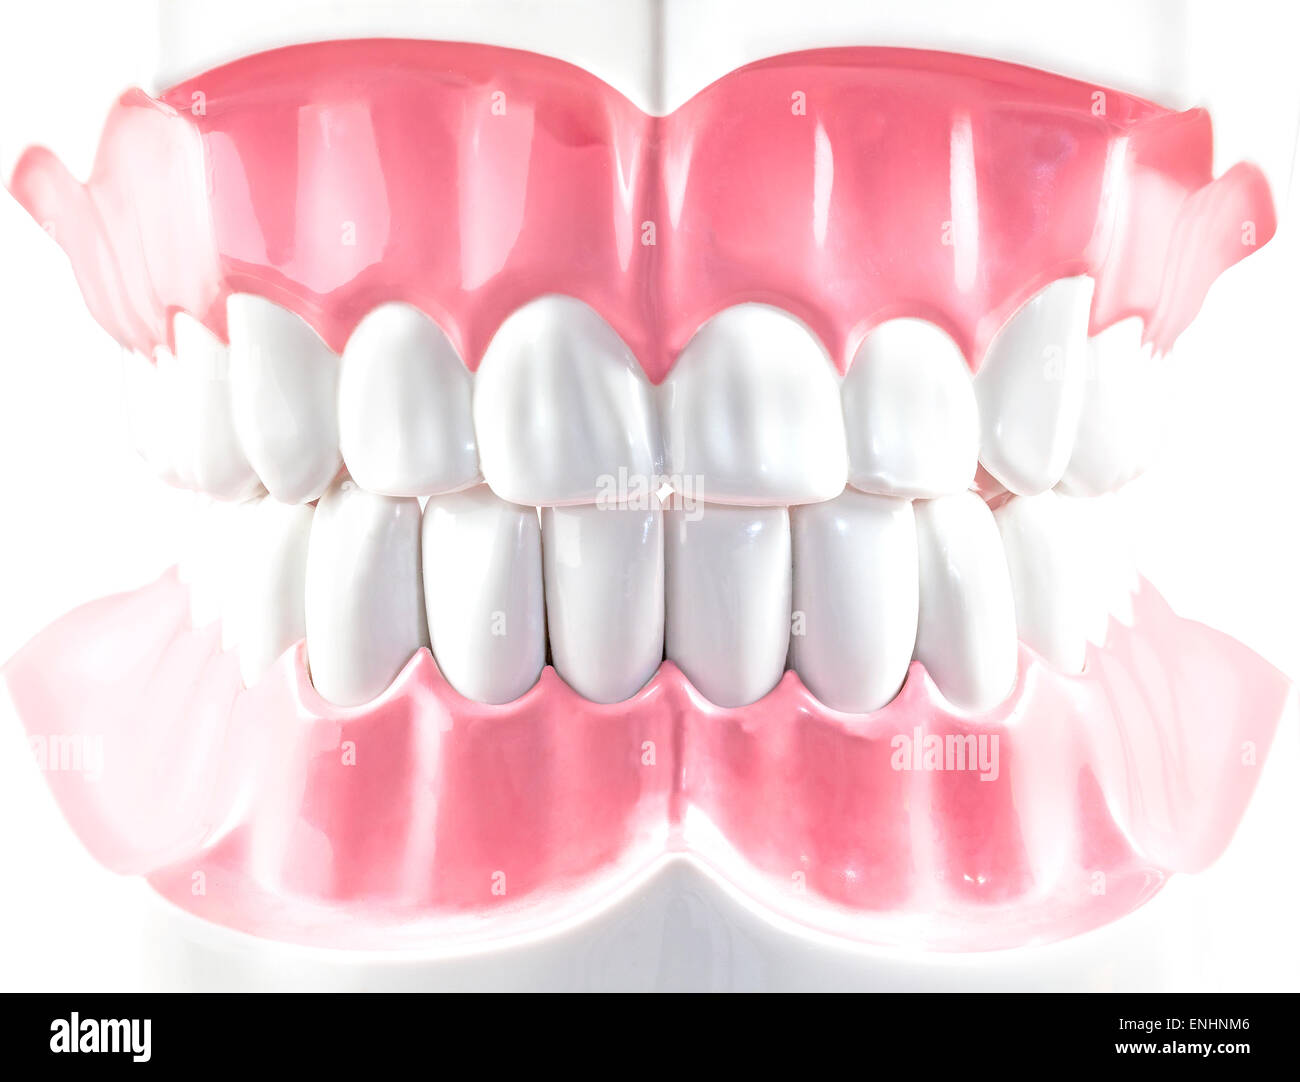 Teeth dental model isolated on white. Stock Photo